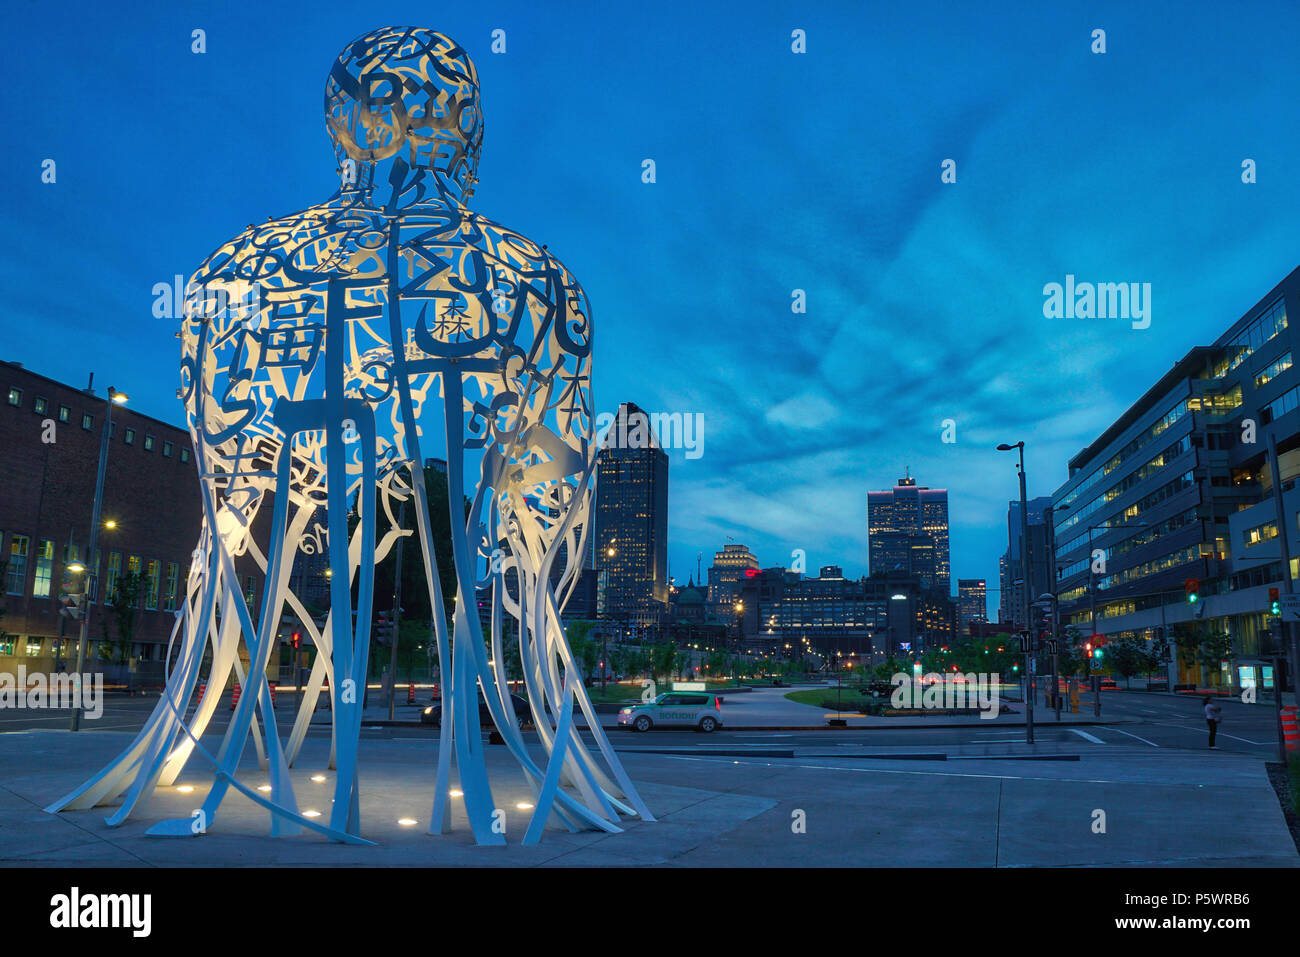 Montreal,Canada, 26 June 2018. Public art scupture The Source by artist Jaume Plensa.Credit:Mario Beauregard/Alamy Live News Stock Photo